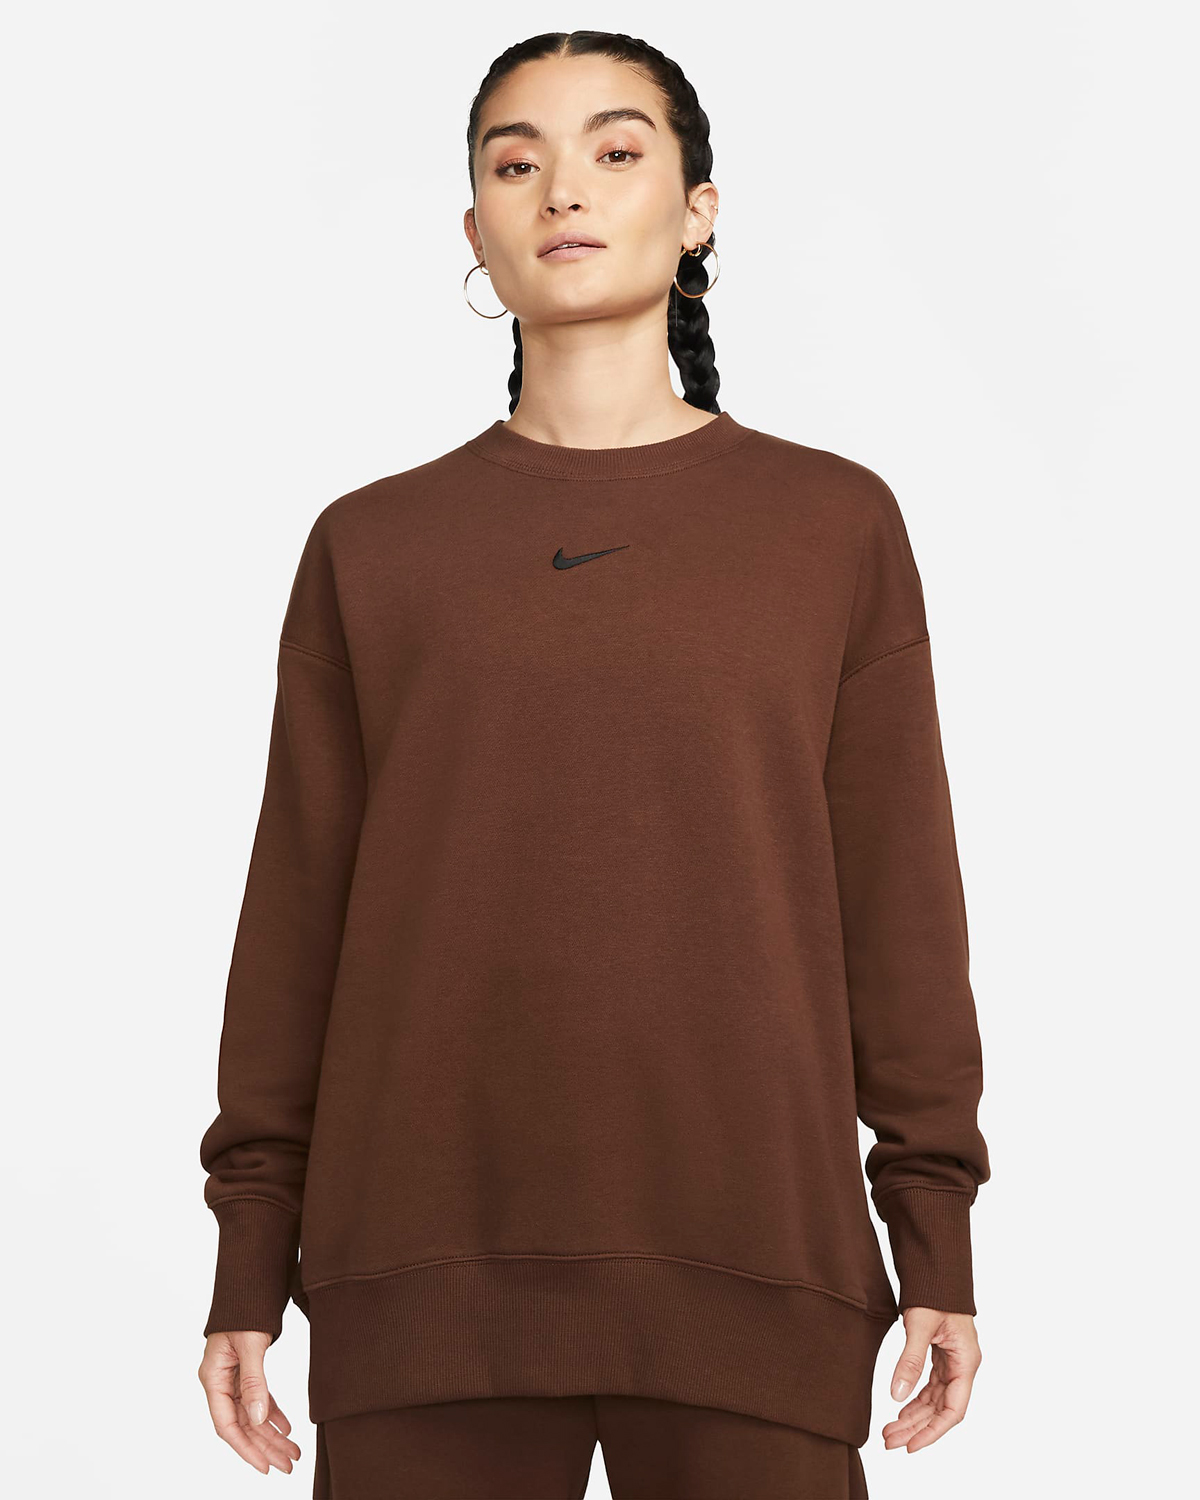 Nike-Womens-Sweatshirt-Cacao-Wow